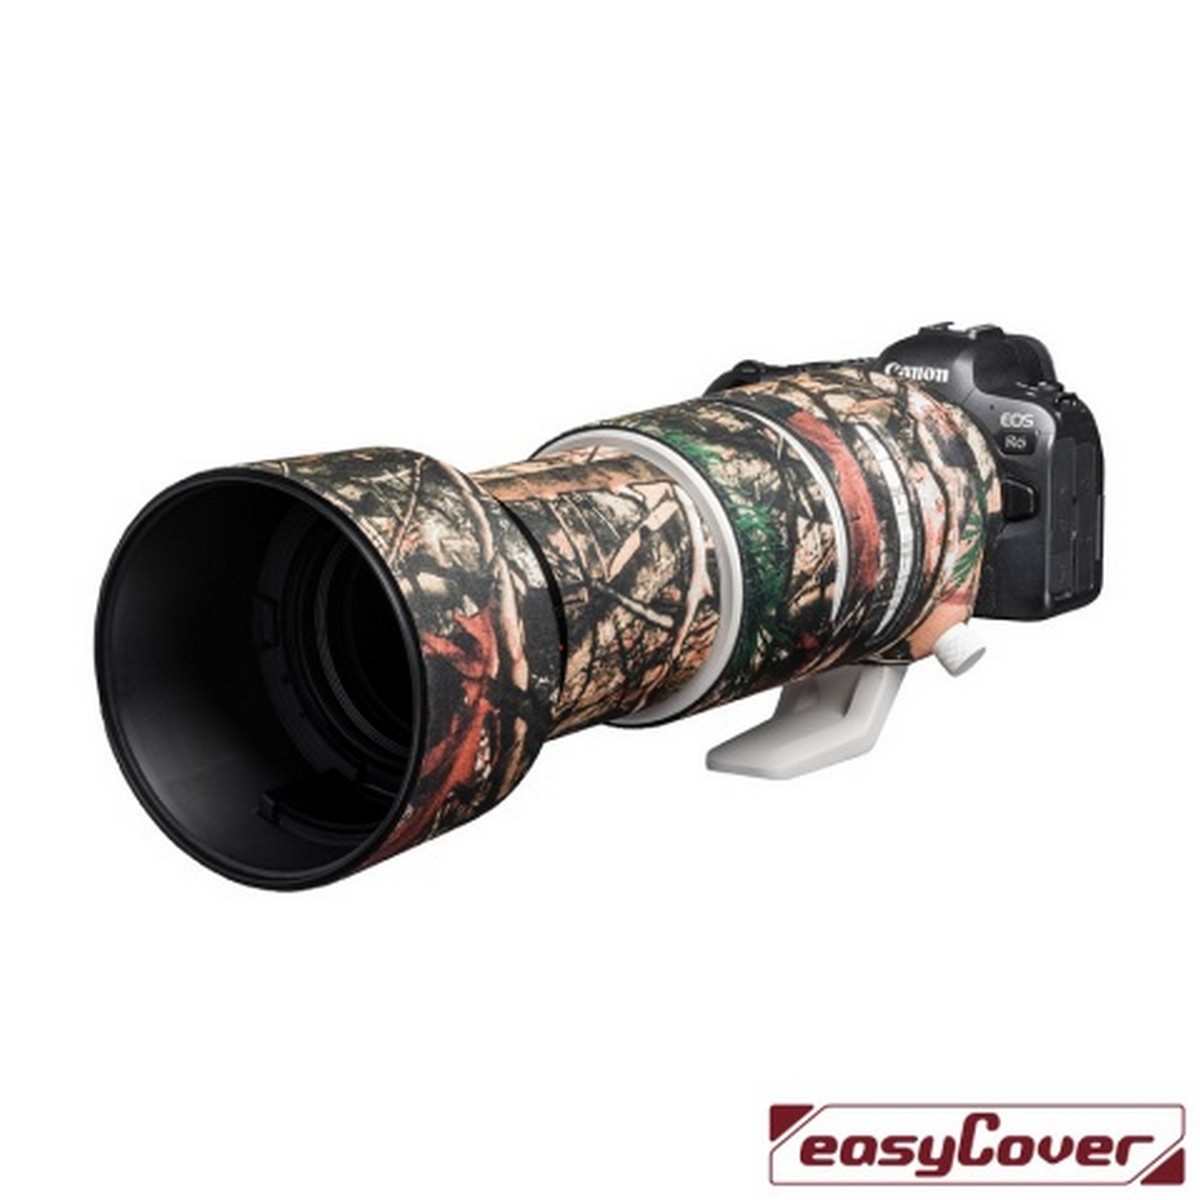 Easycover Lens Oak Objektivschutz für Canon RF 100-500 mm 1:4,5-7,1L IS USM Wald Camouflage